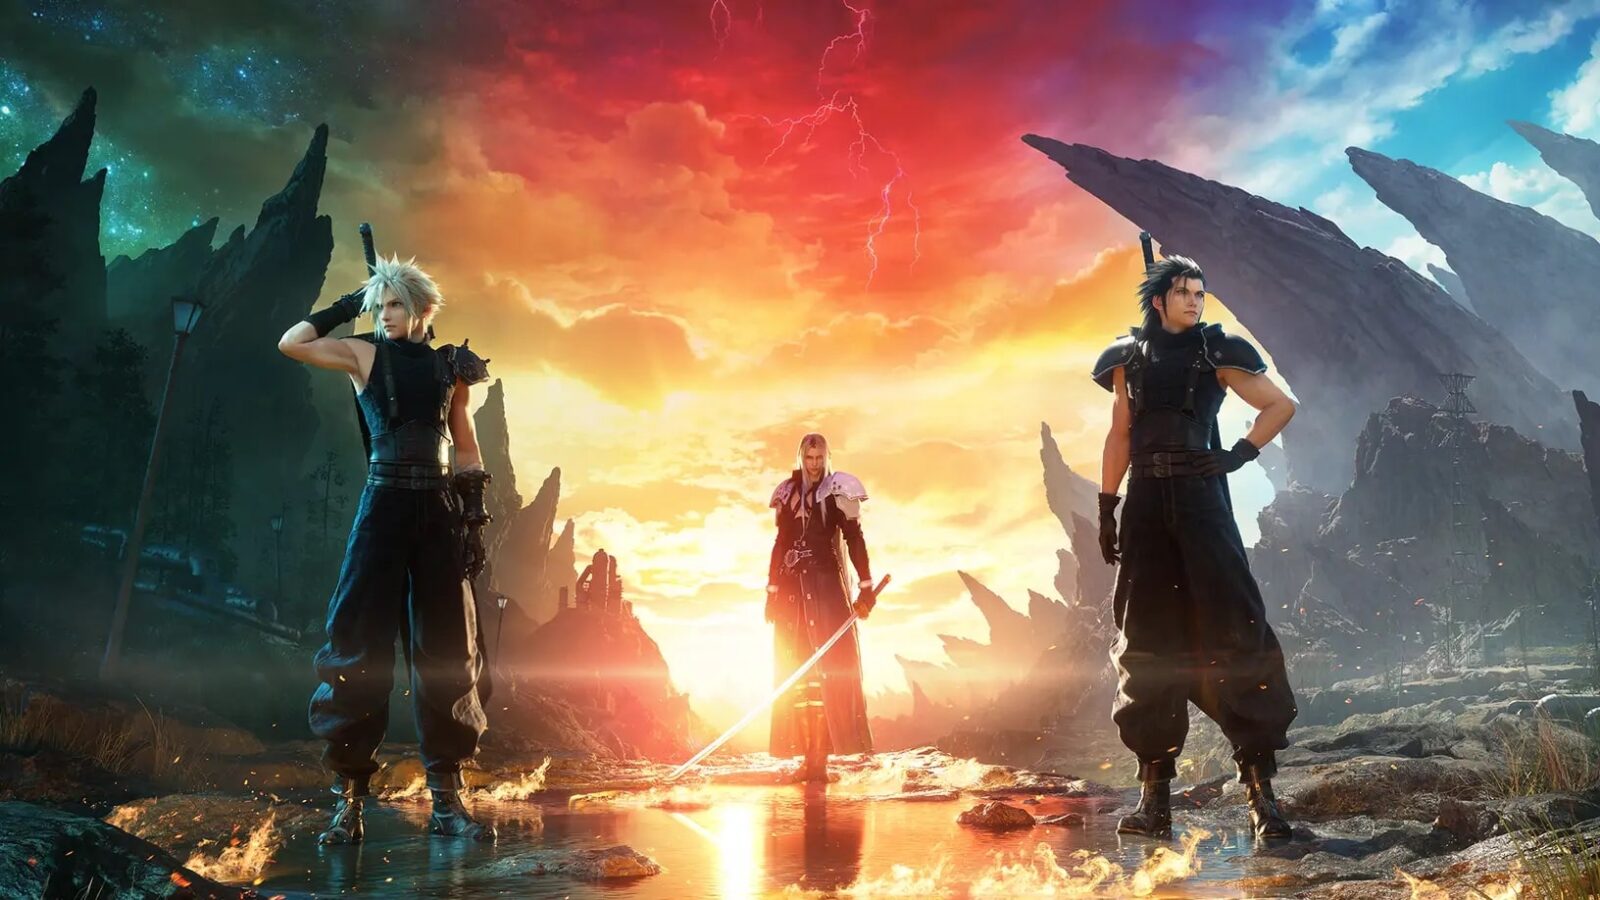 Final Fantasy VII Rebirth : Nouveau trailer, date de sortie, édition collector, durée de vie...